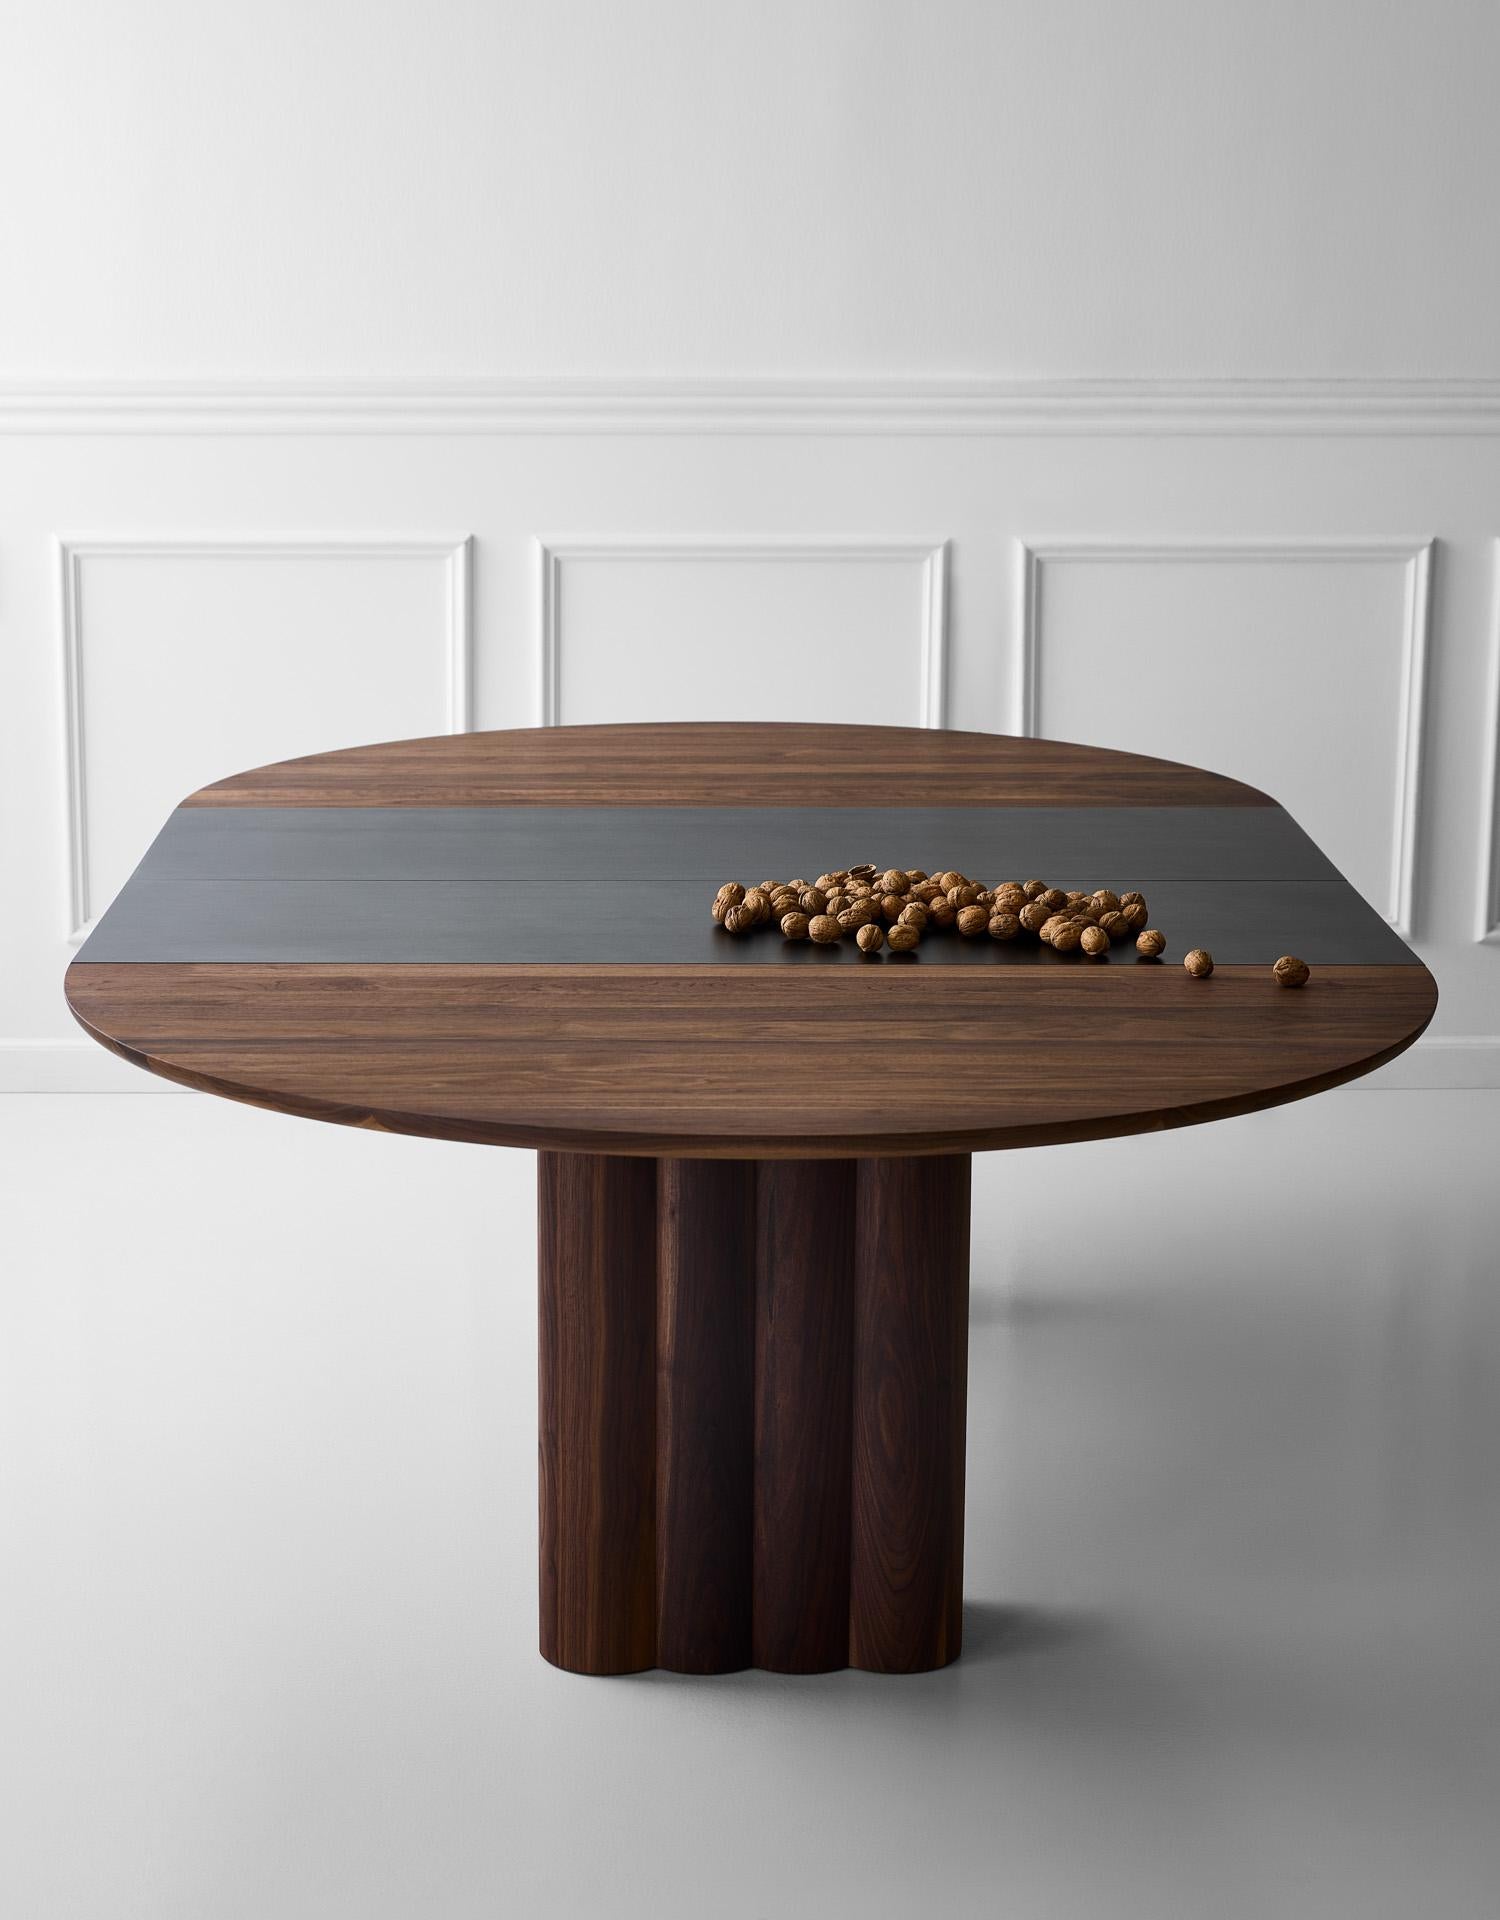 Scandinave moderne Table de salle à manger rondePlush par Dk3, en chêne naturel, 160 cm en vente